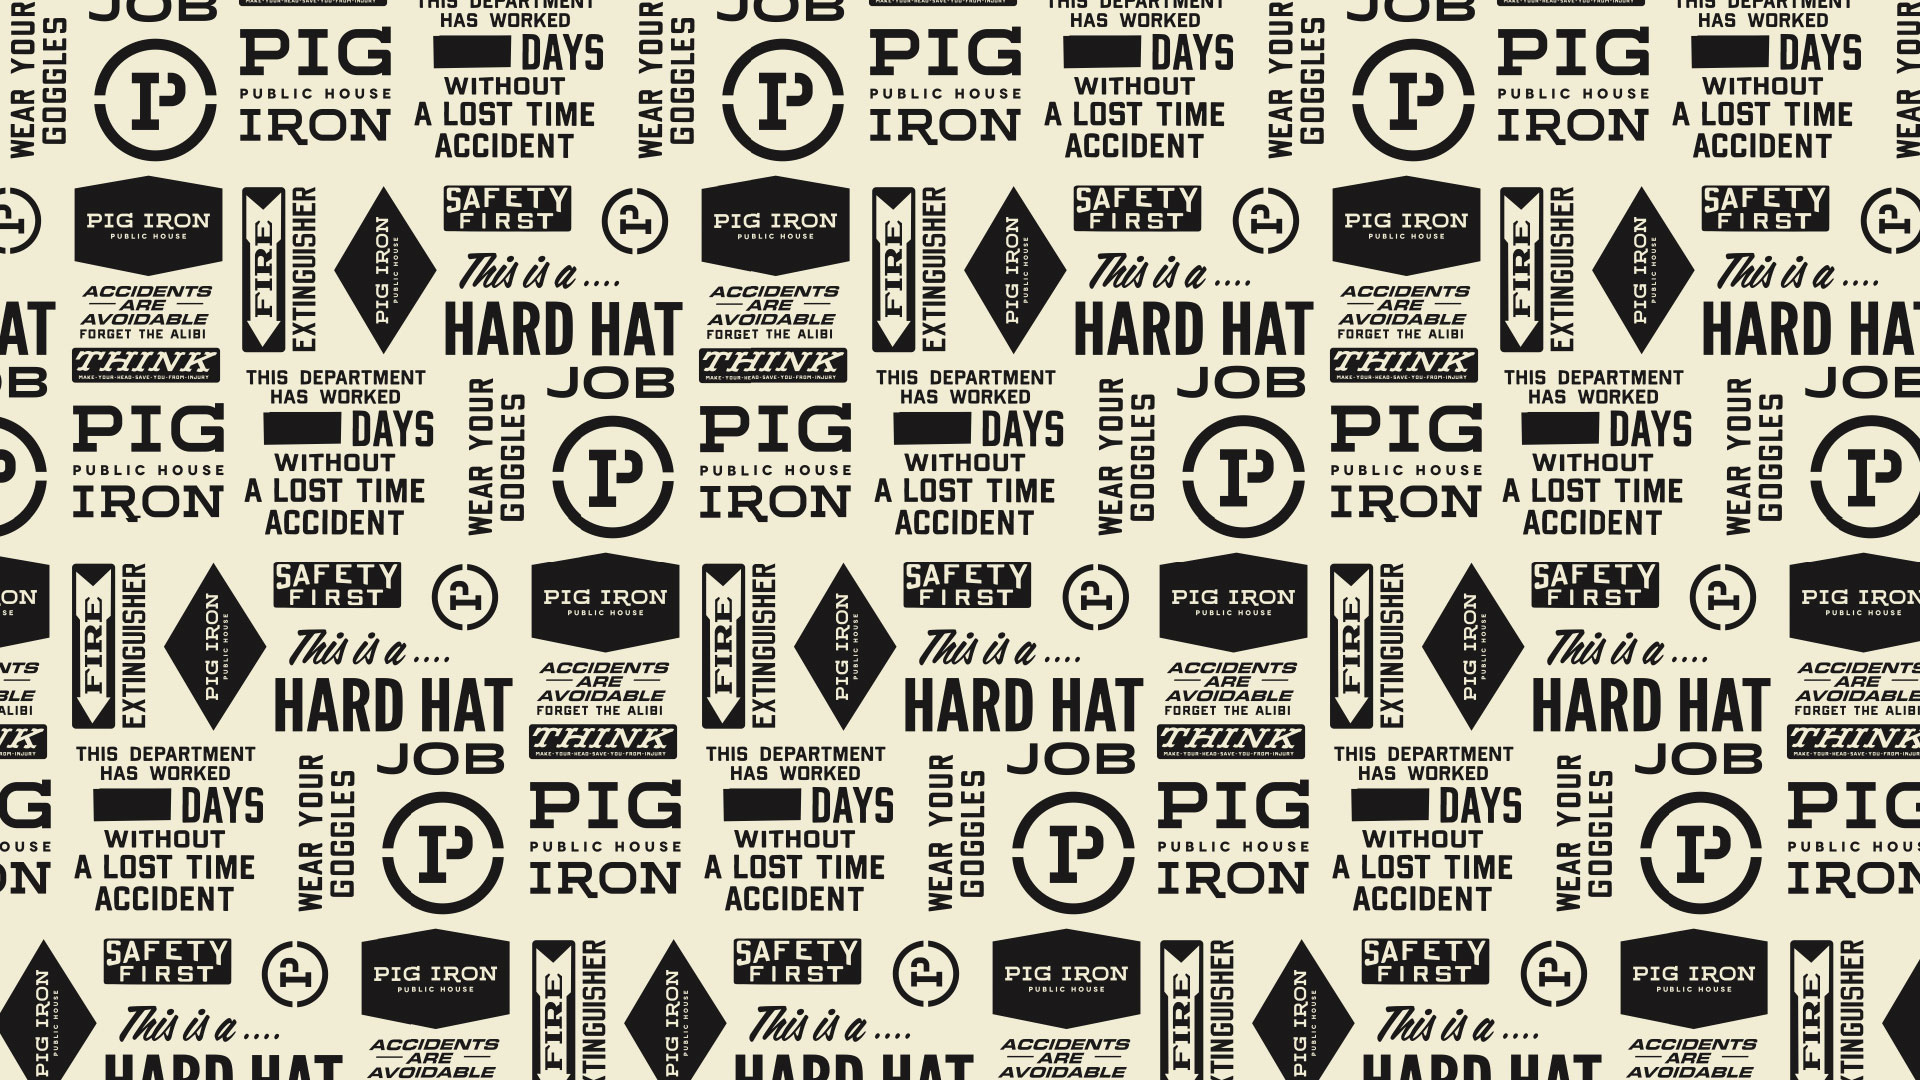 Pig Iron Public House wax paper motif